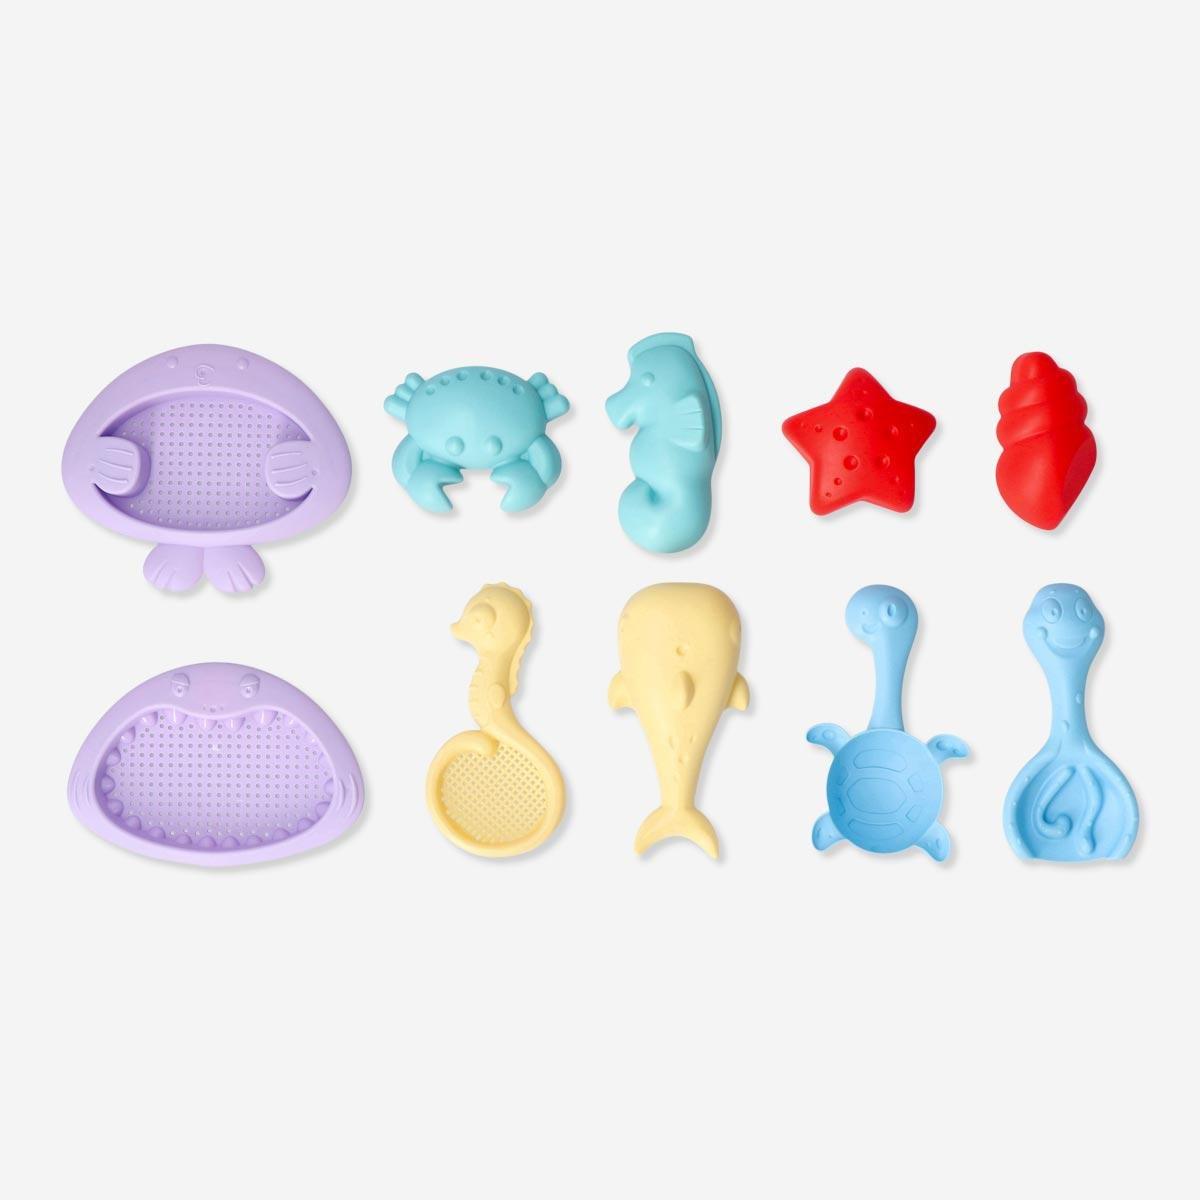 Multicolour beach toys. 5 pcs